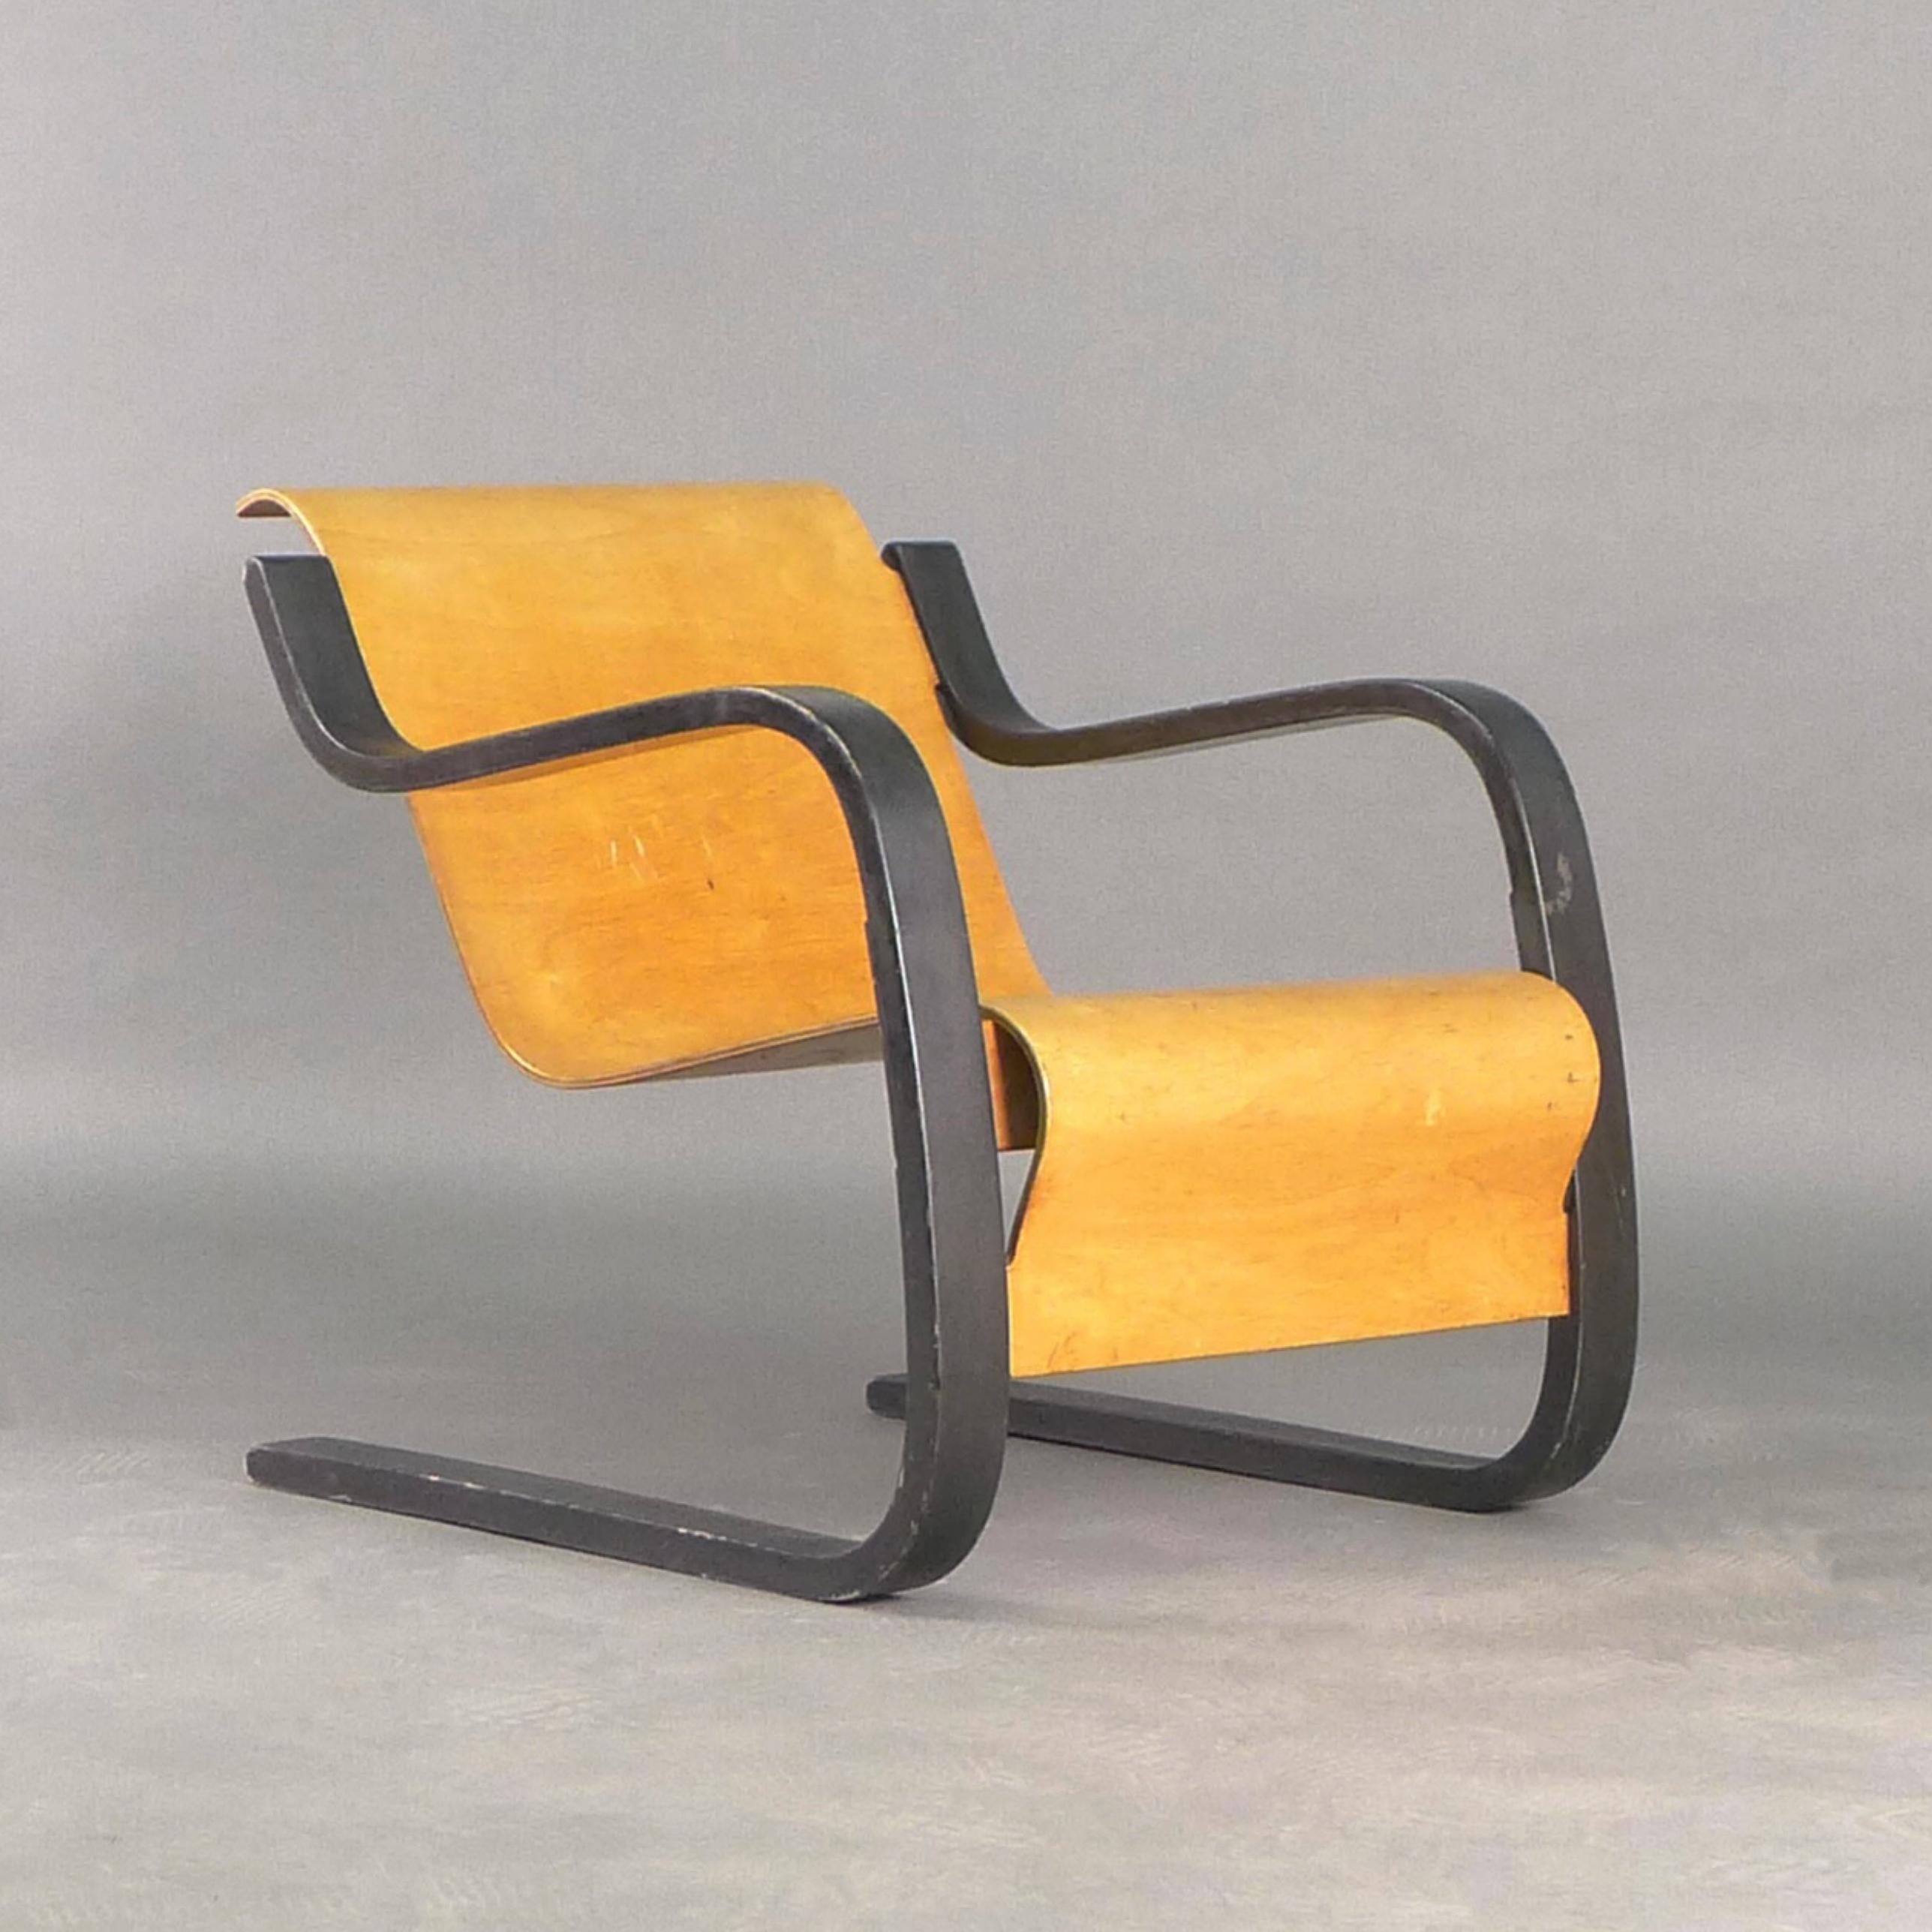 Freitragender Stuhl Alvar Aalto aus Birkenholz und Sperrholz, Modell 31, Huonekalu-ja, Finnland im Angebot 5